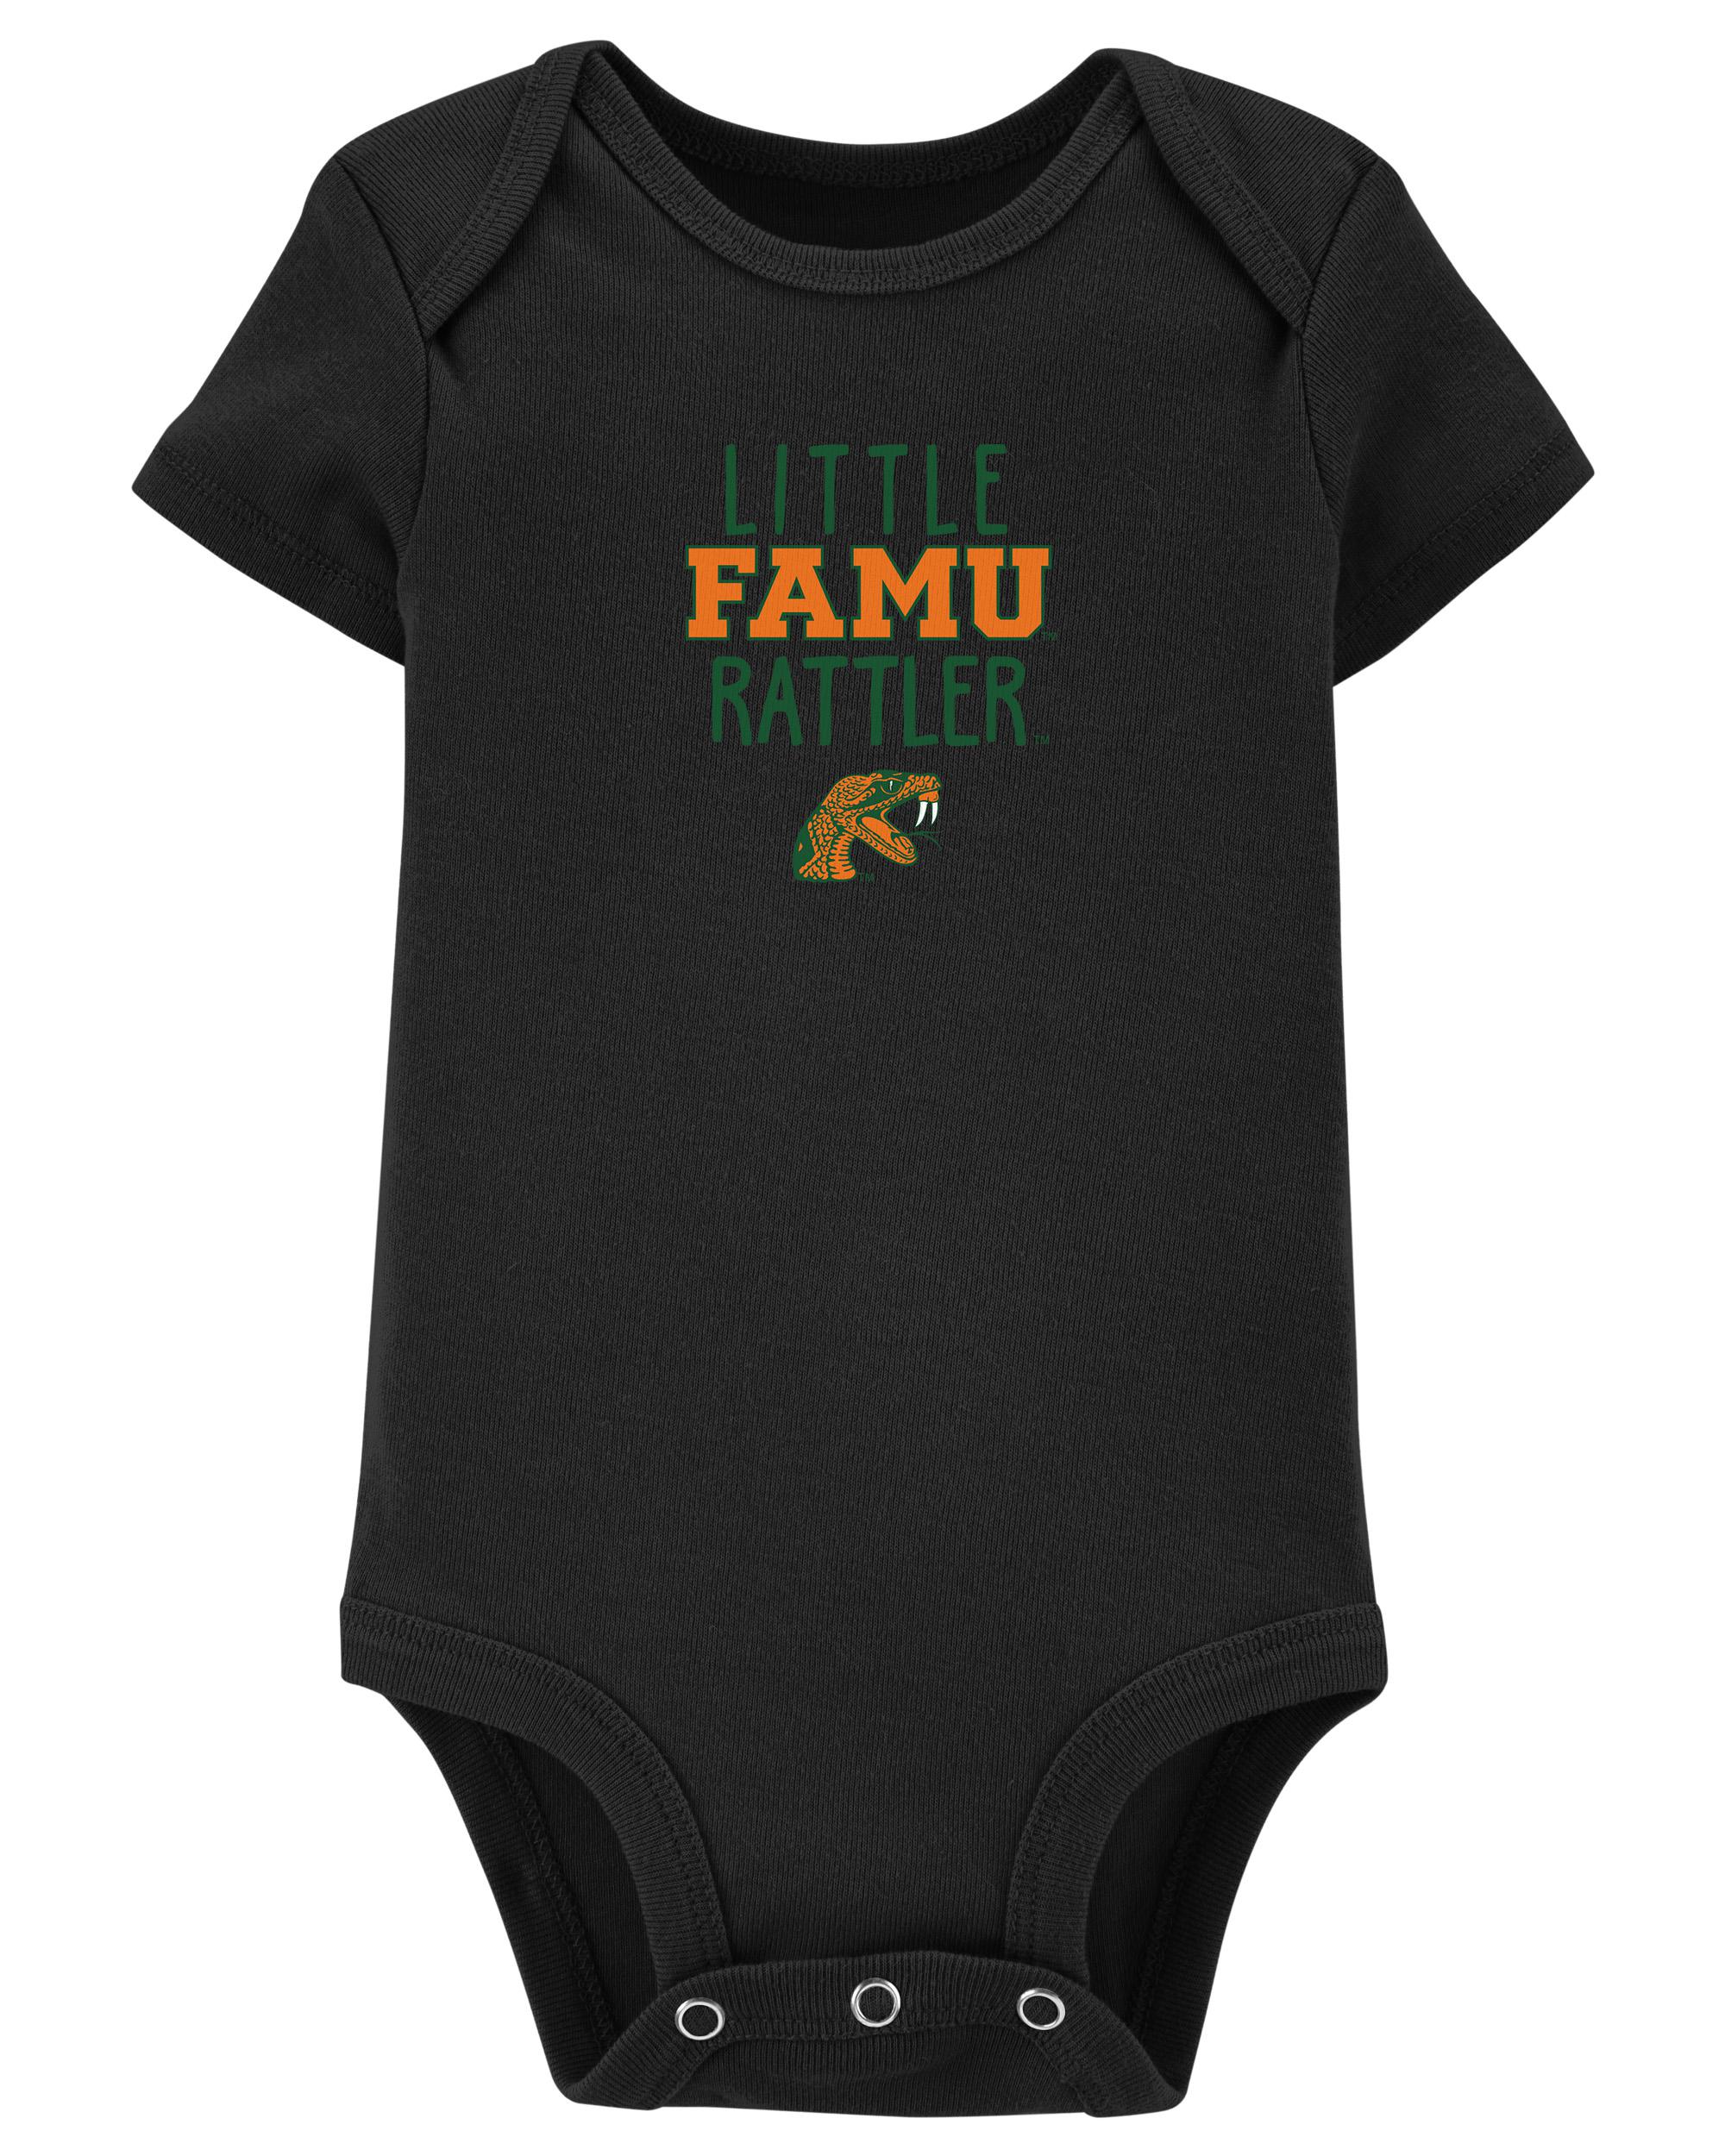 Baby Florida A&M University Bodysuit